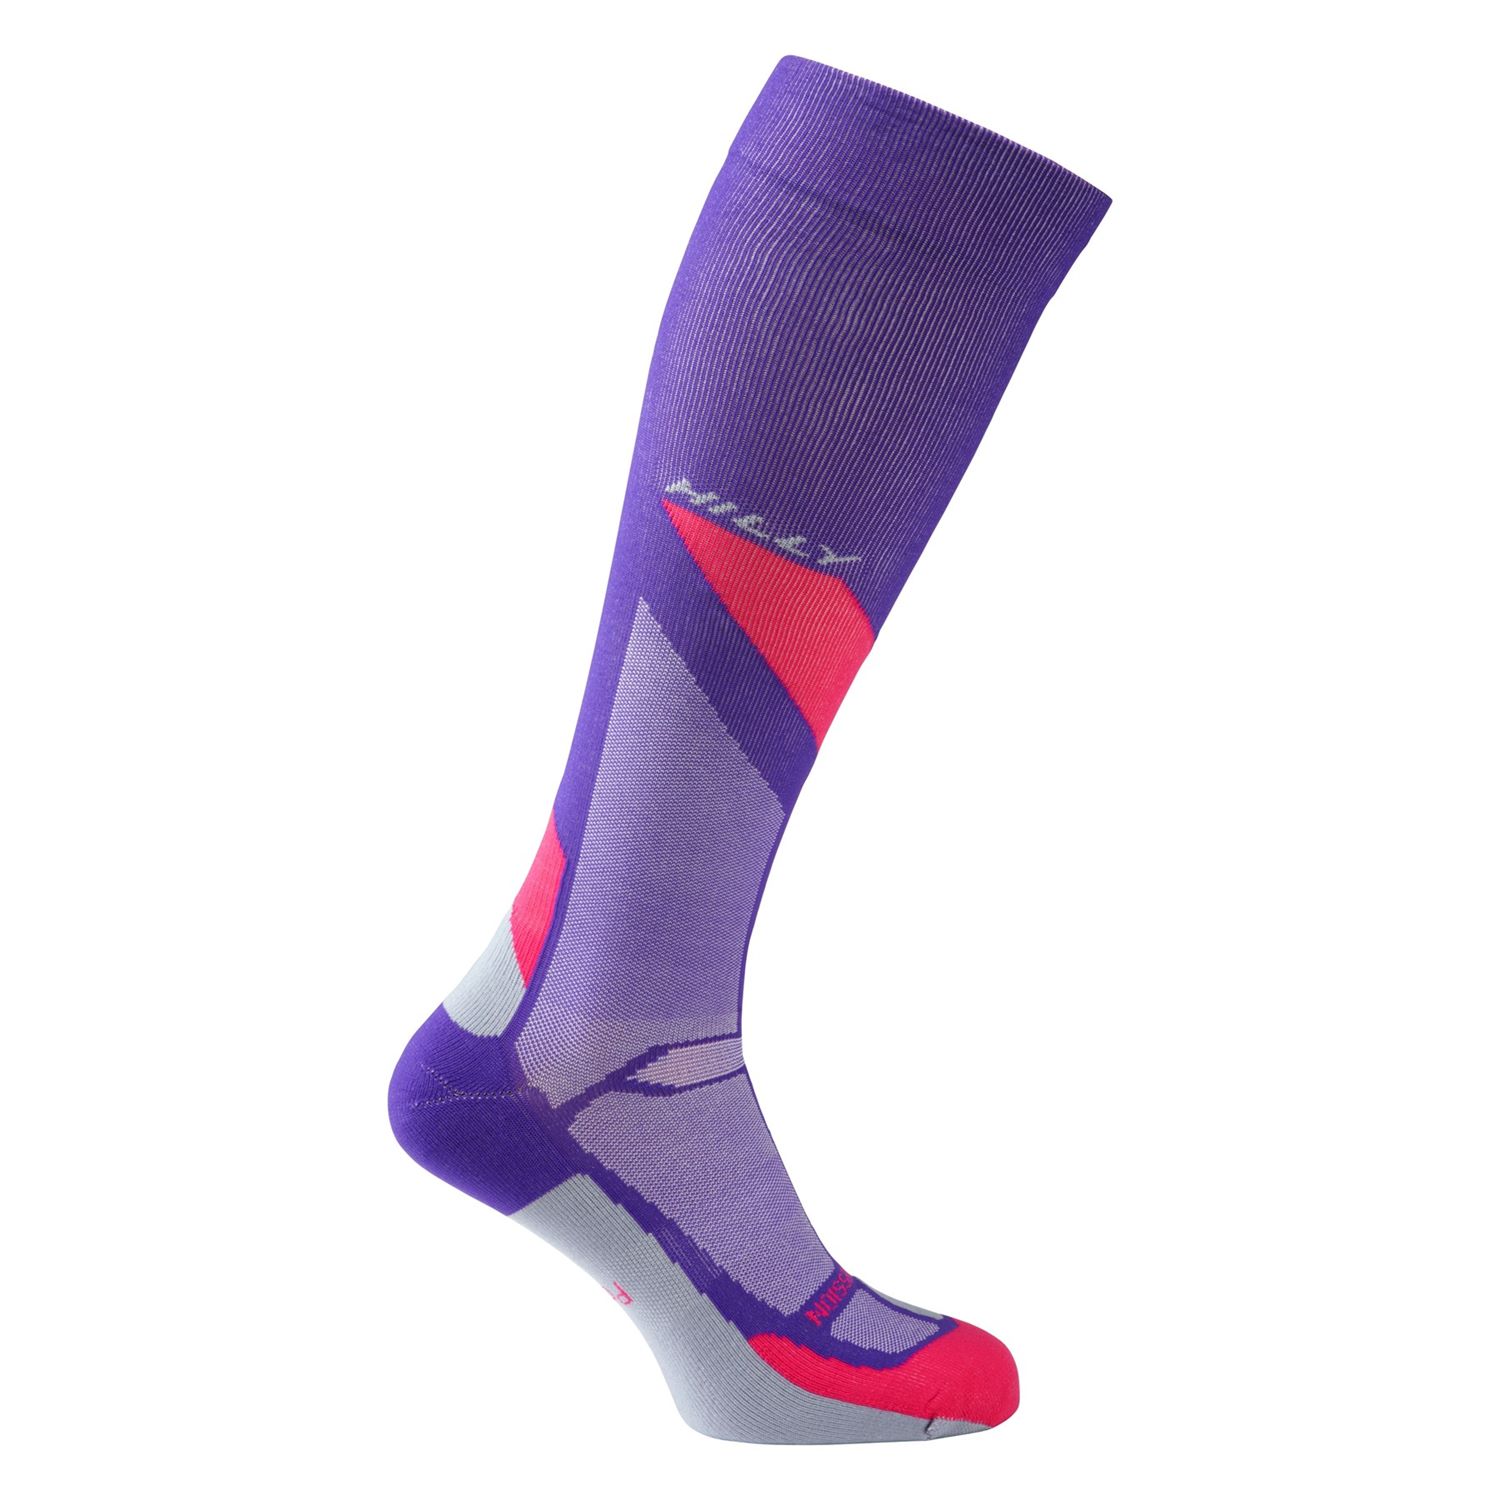 15 Amazing Marathon Compression Socks For 2023